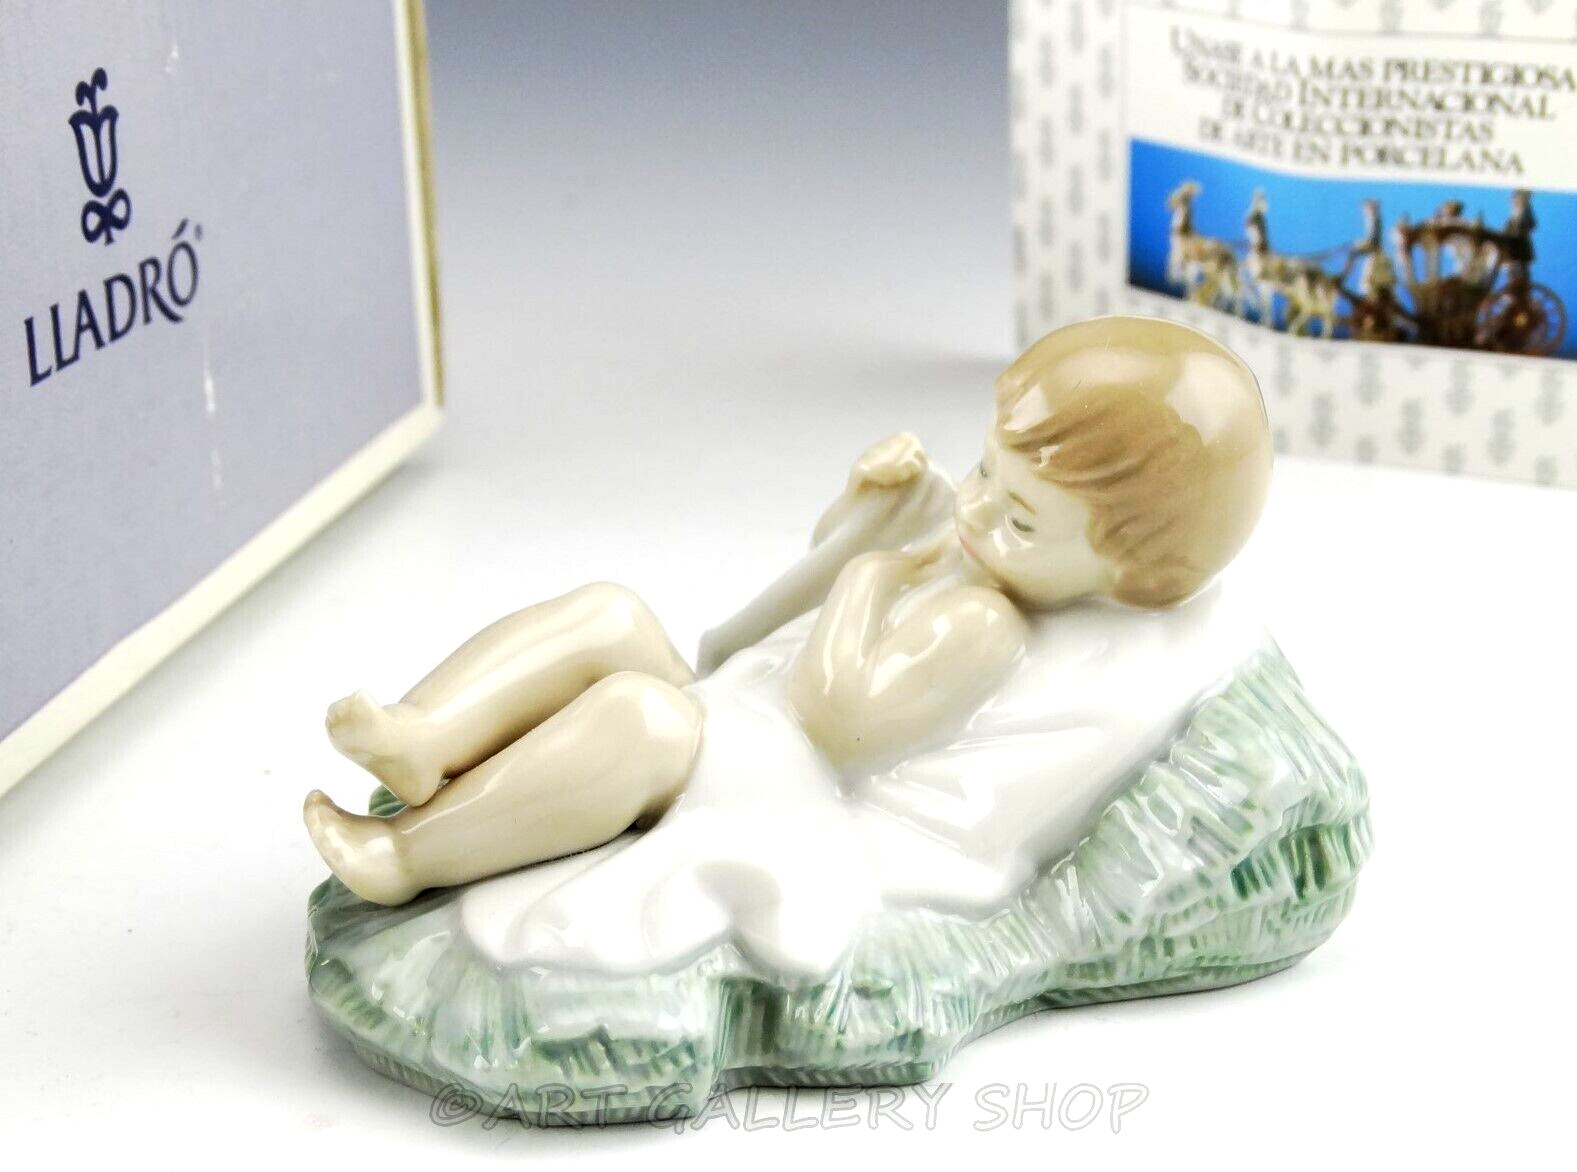 Lladro Figurine CHRISTMAS NATIVITY BABY JESUS #5478 Mint in Box